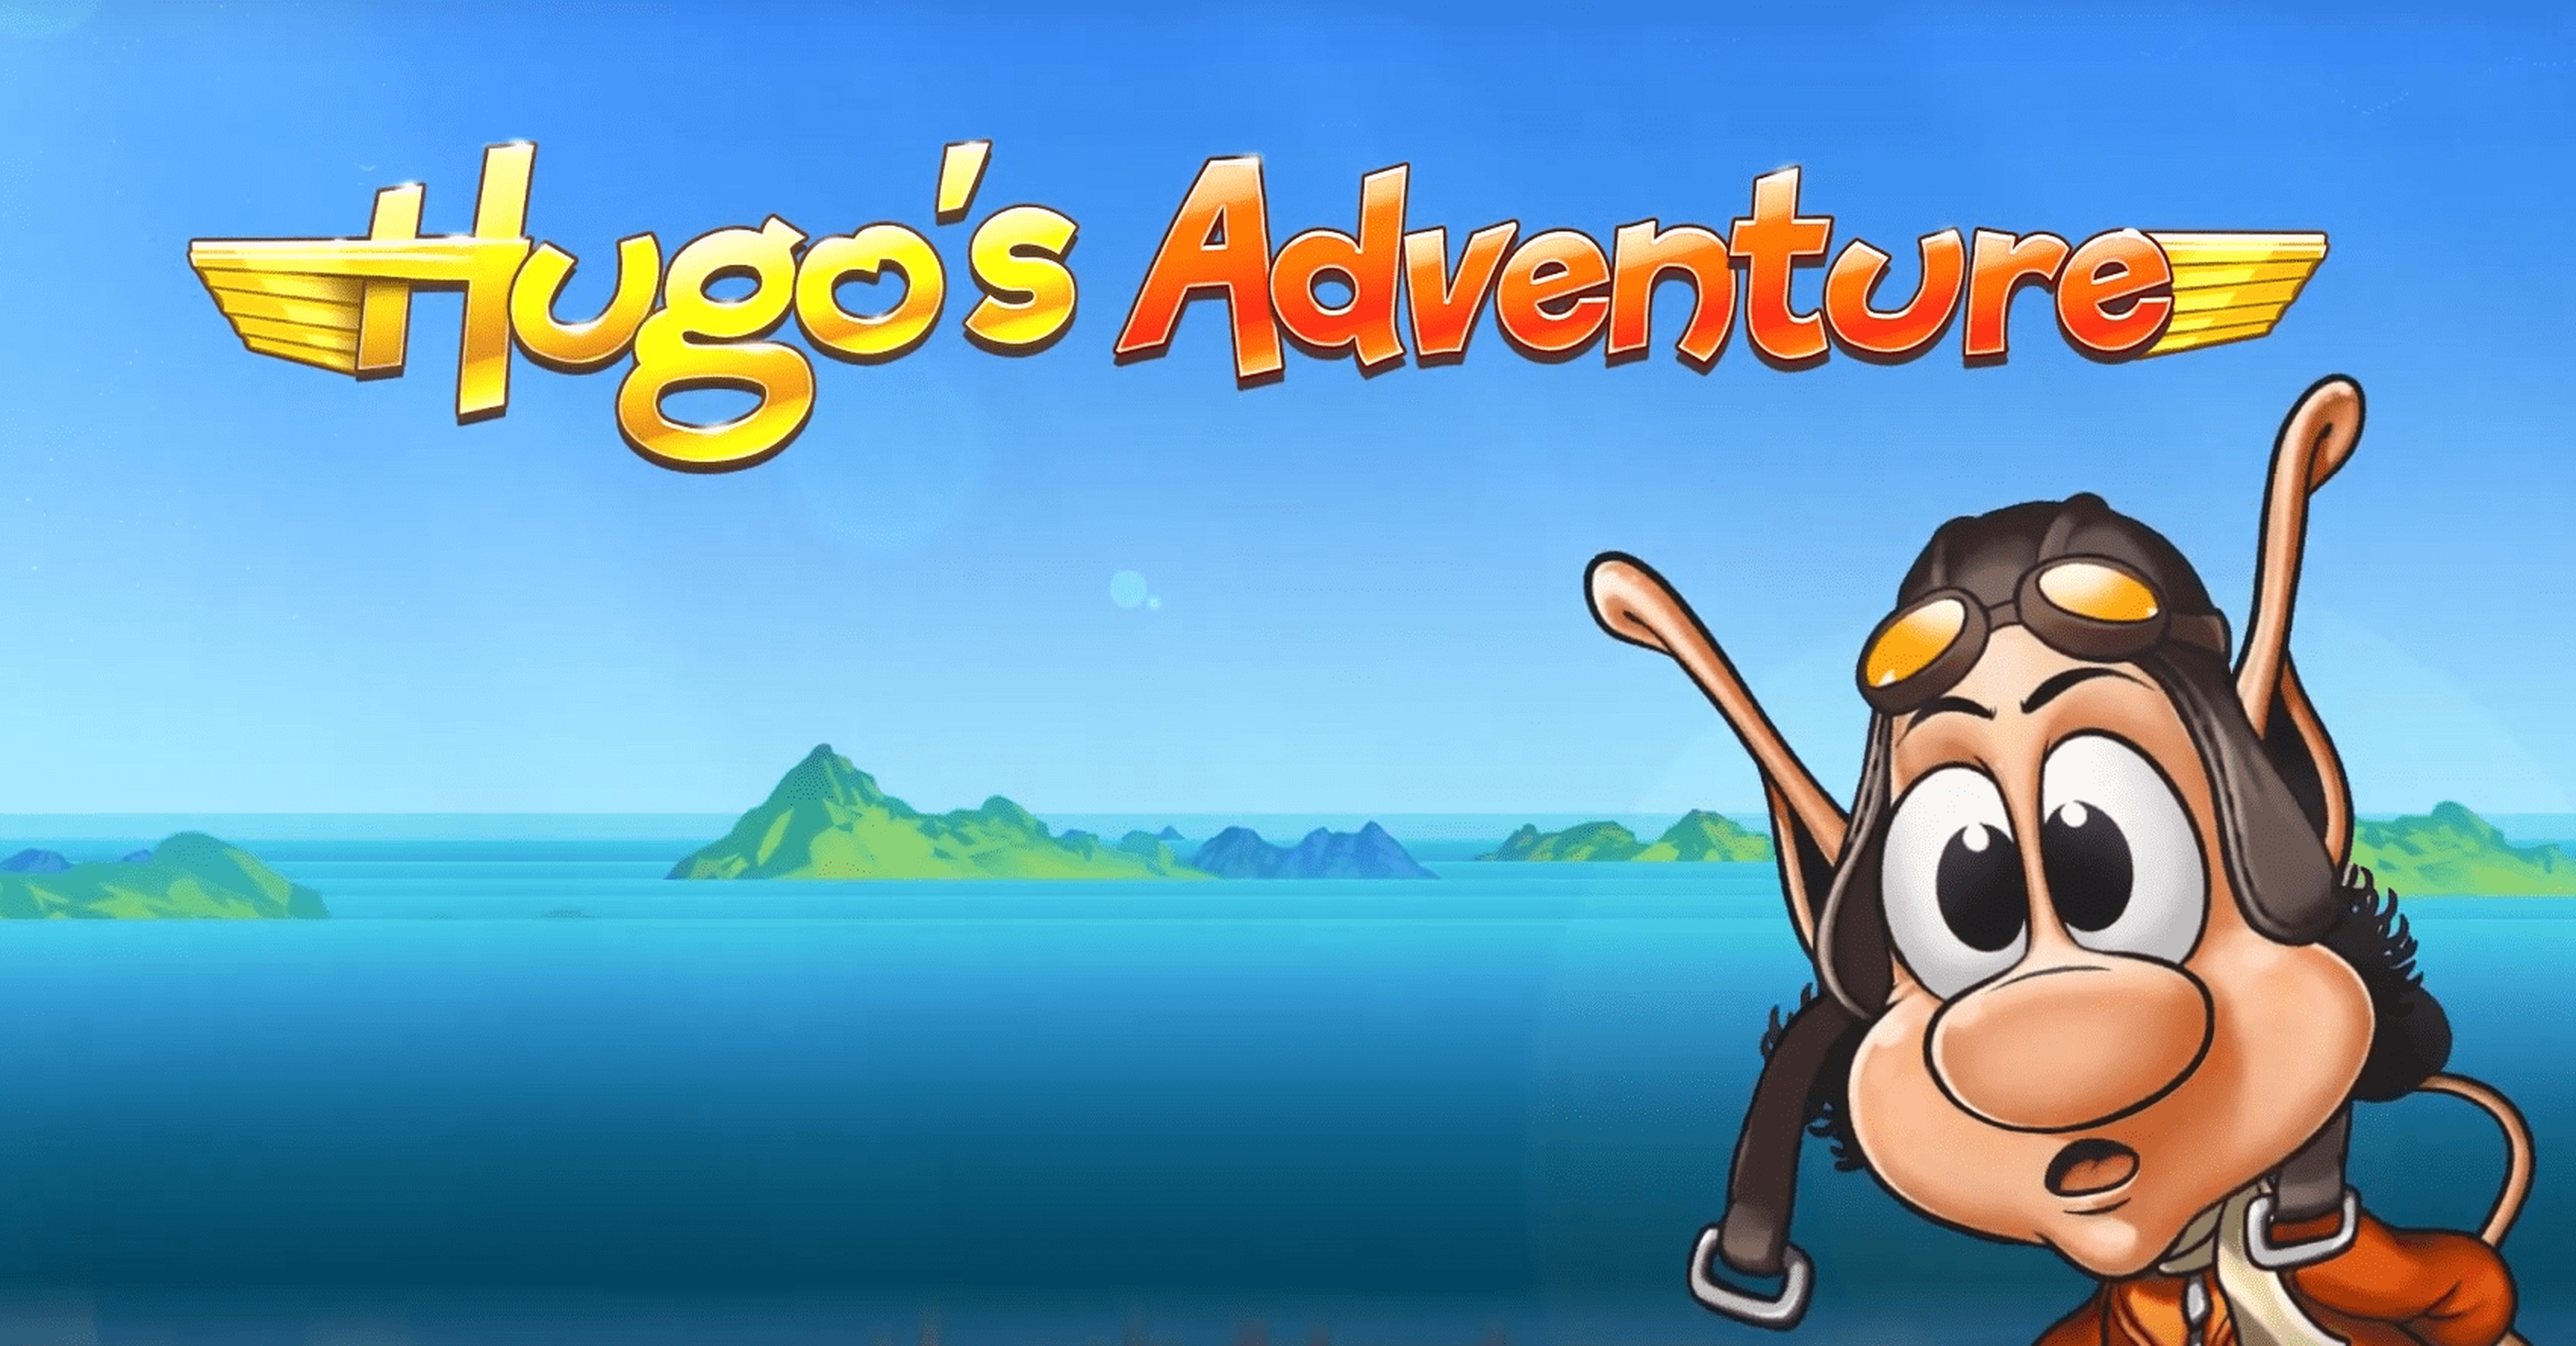 Hugo's Adventure demo